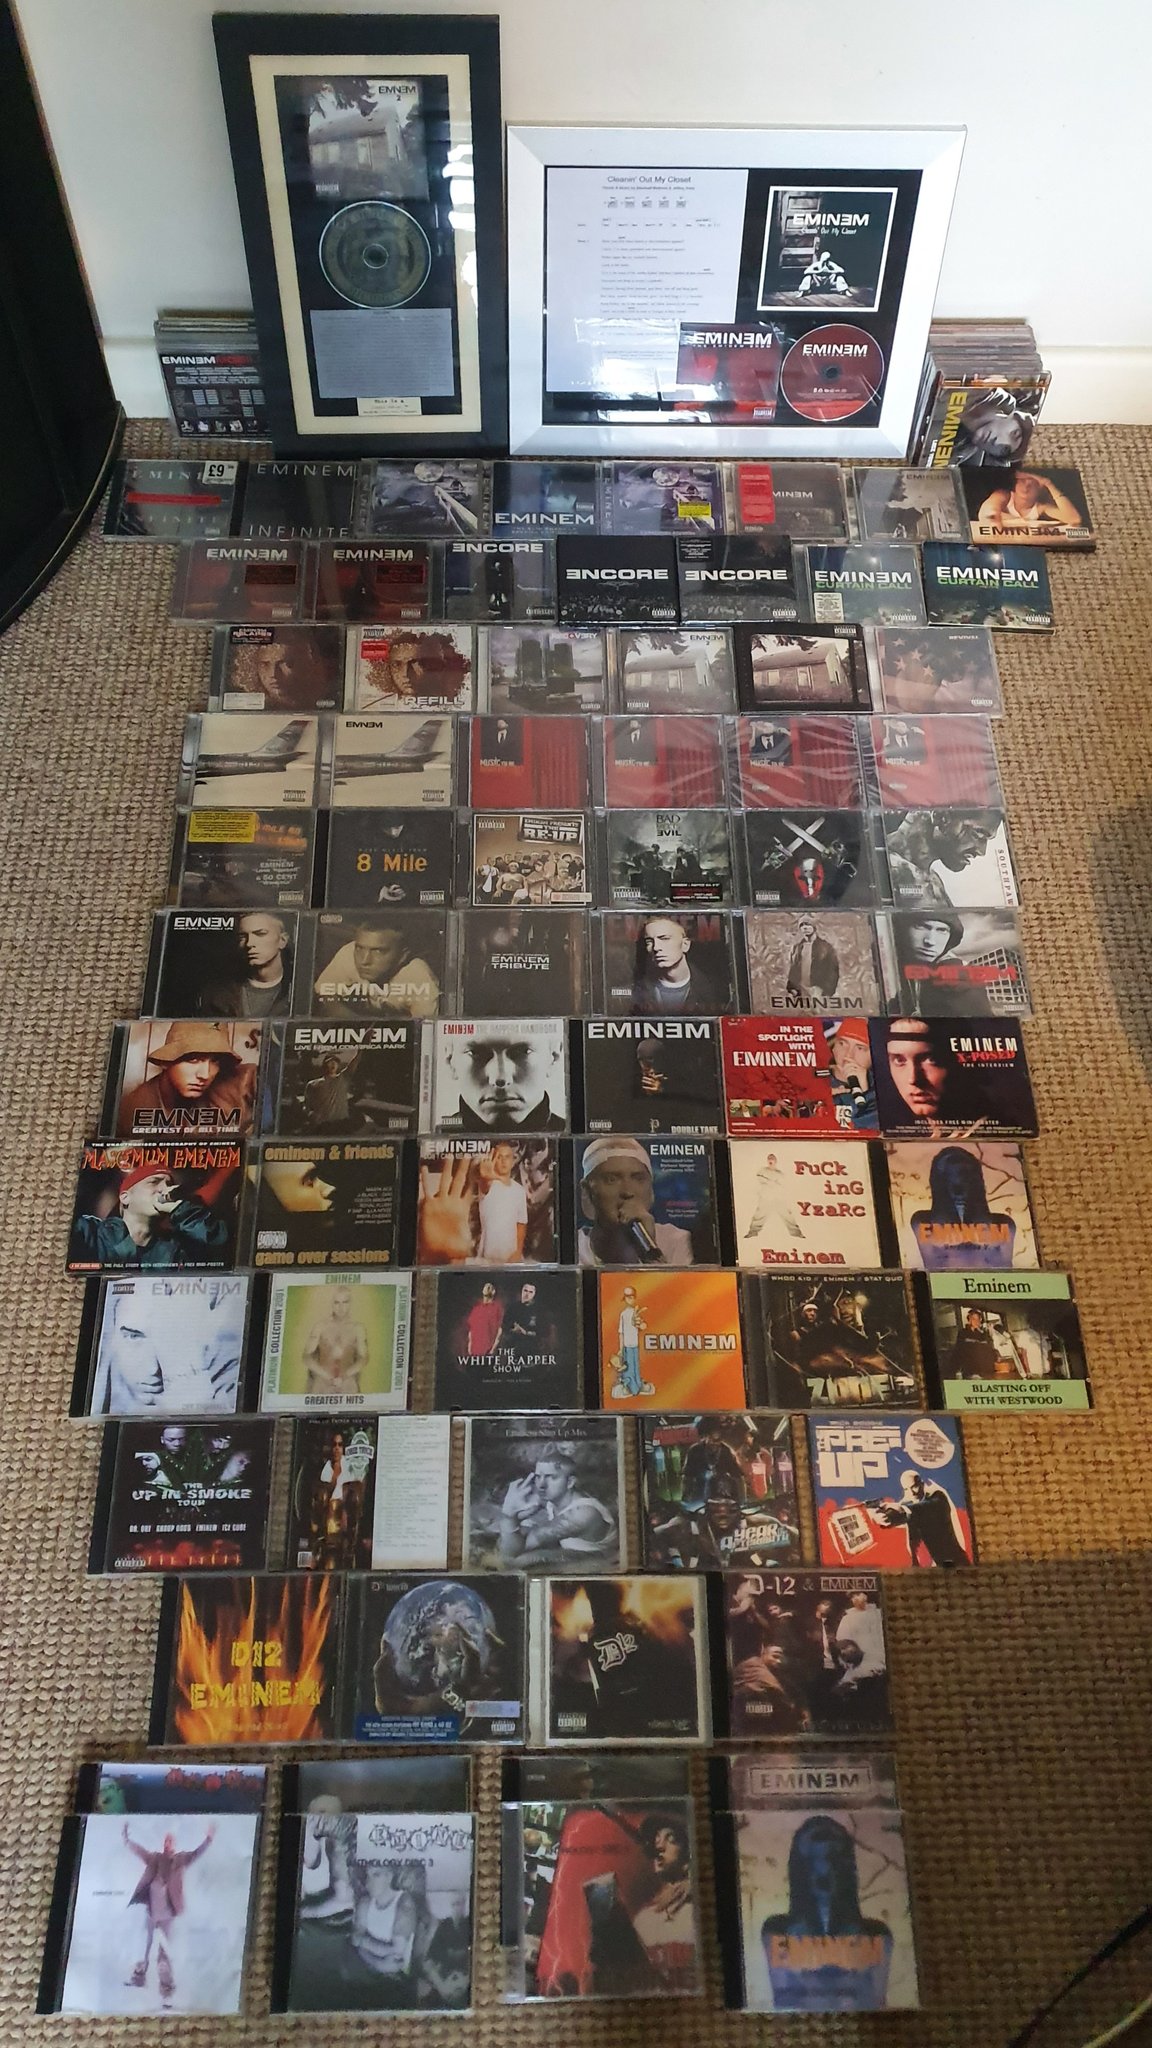 Gary on X: "My EMINƎM cd collection @eminem #eminem #infinite #slimshadylp  #mmlp #theeminemshow #encore #curtaincall #relapse #recovery #mmlp2  #revival #kamikaze #MTBMB #8mile #loseyourself #reup #shadyxv #badmeetsevil  #d12 #mixtape #Collections ...